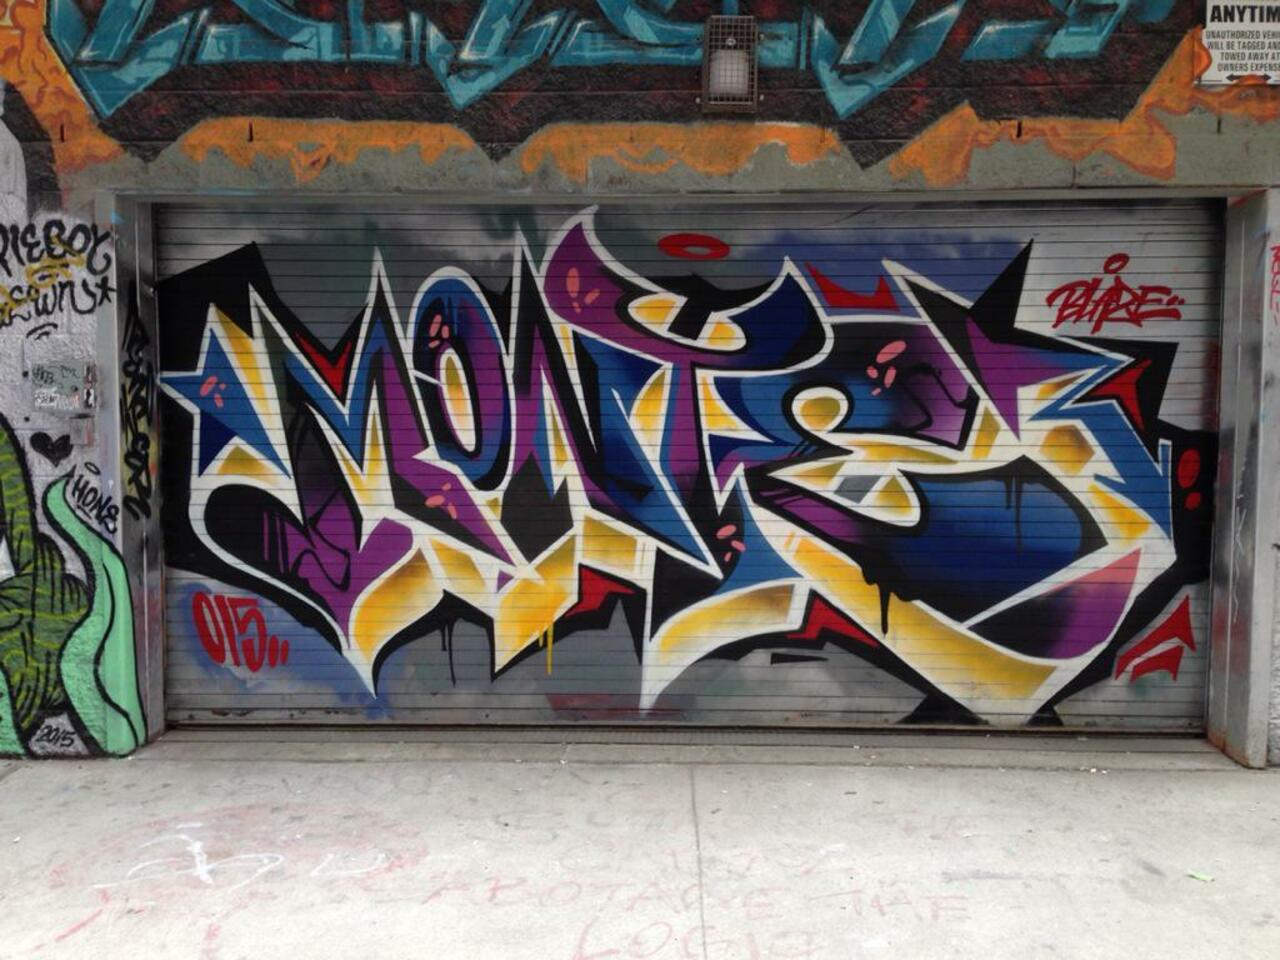 #graffiti #streetart #spraypaint #toronto #MONTE #BLAZE http://t.co/GGBvfWCmG7